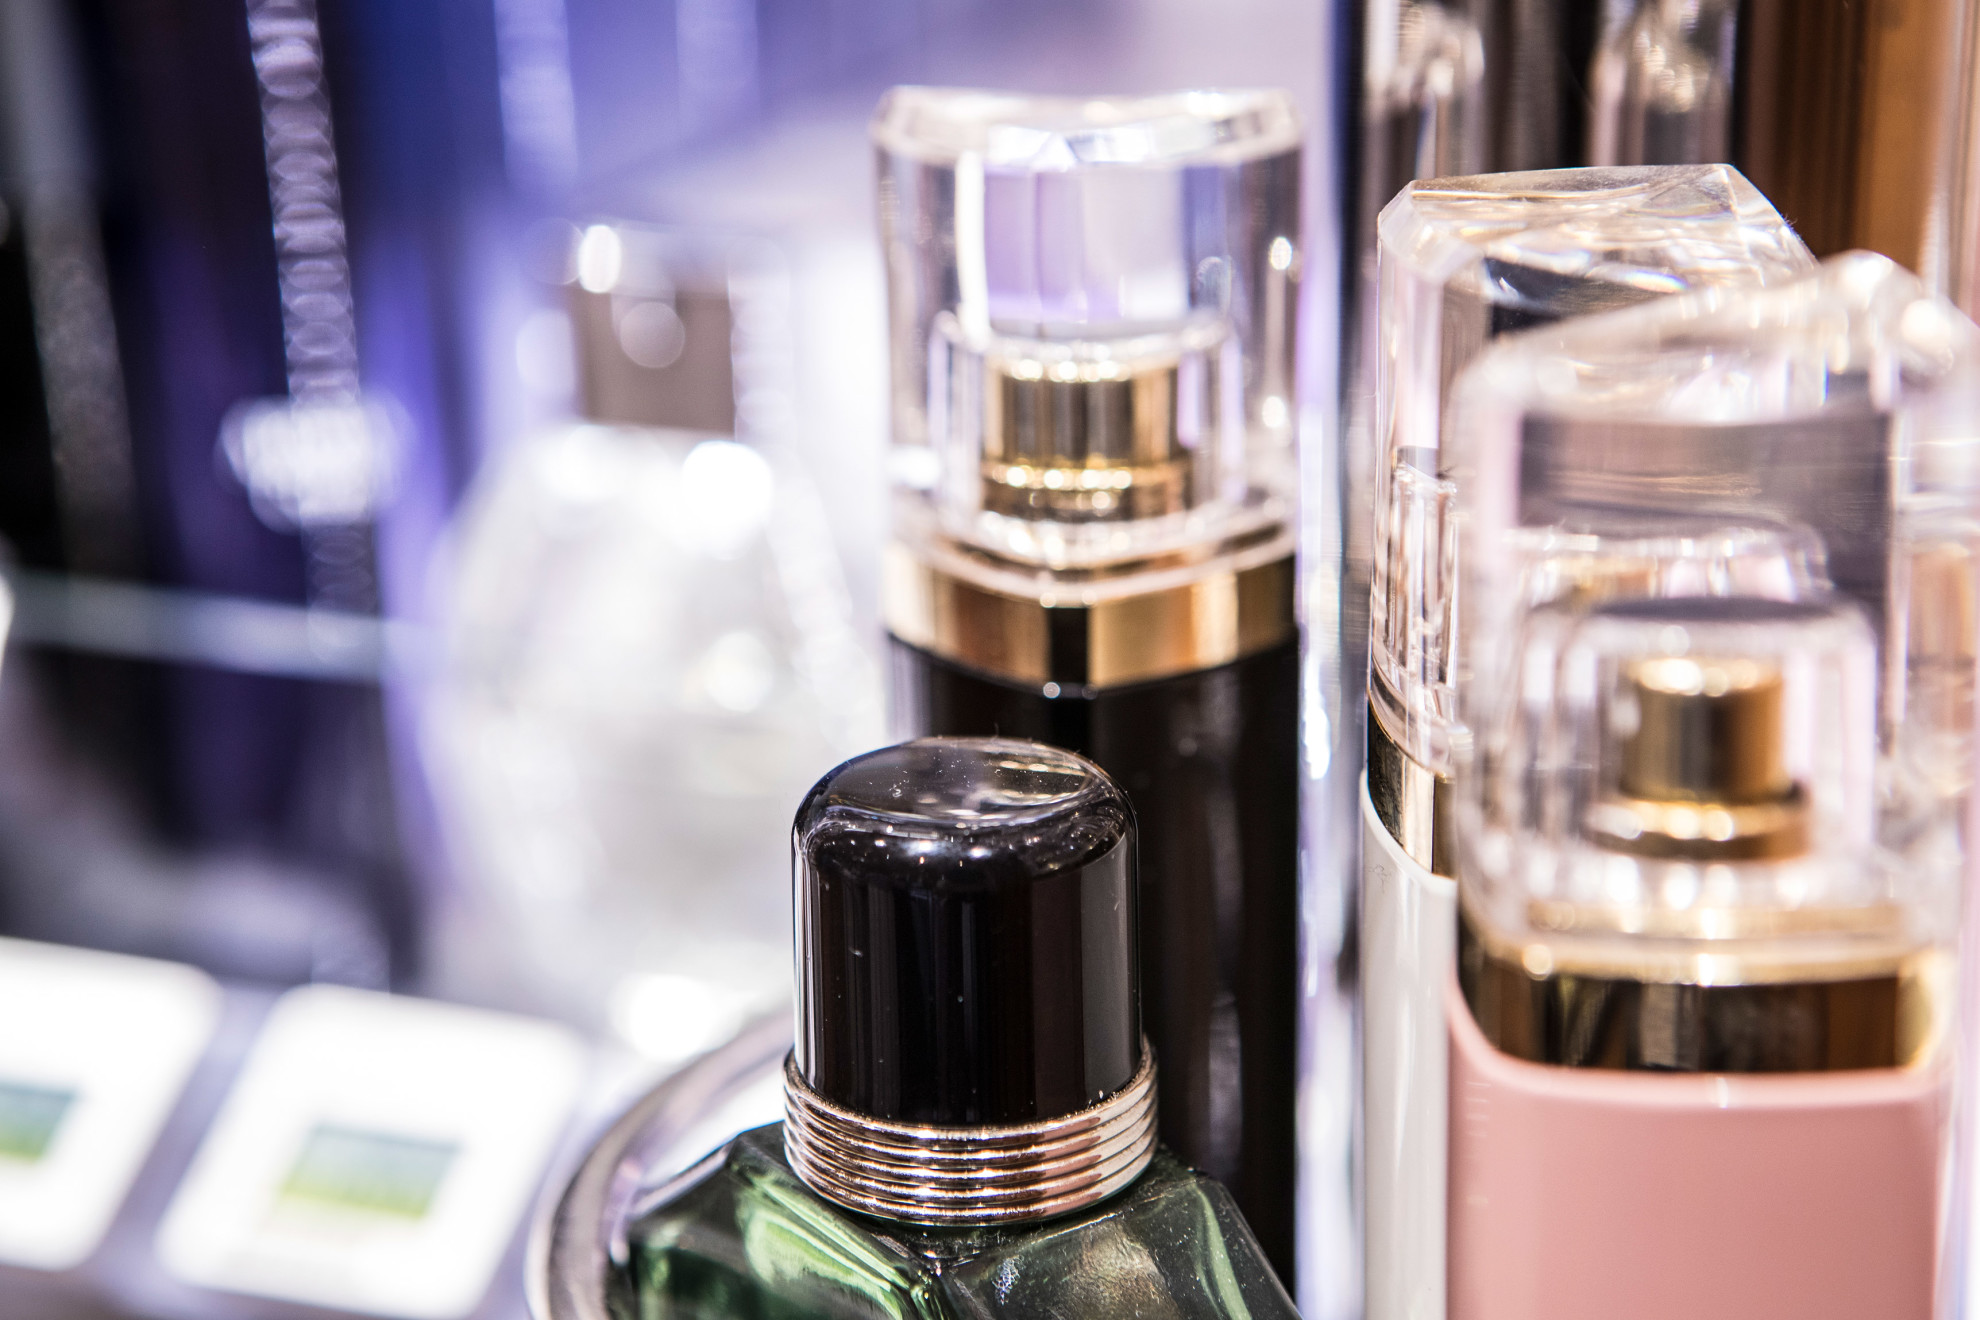 Perfumes & cosmetics - duty free shopping